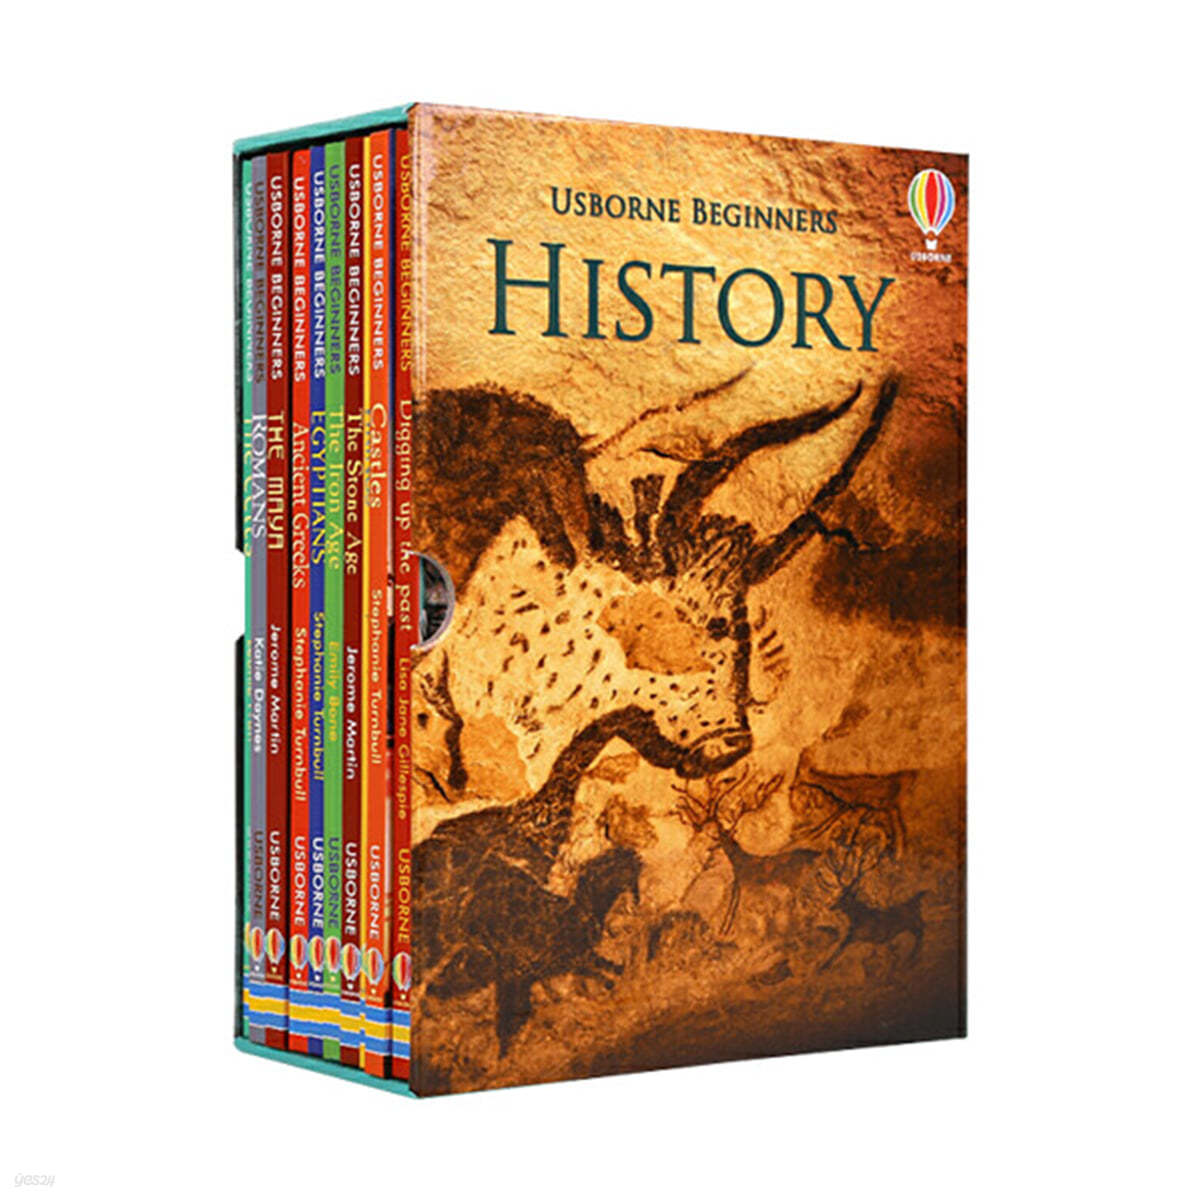 Usborne Beginners History 10 Books Box Set Collection